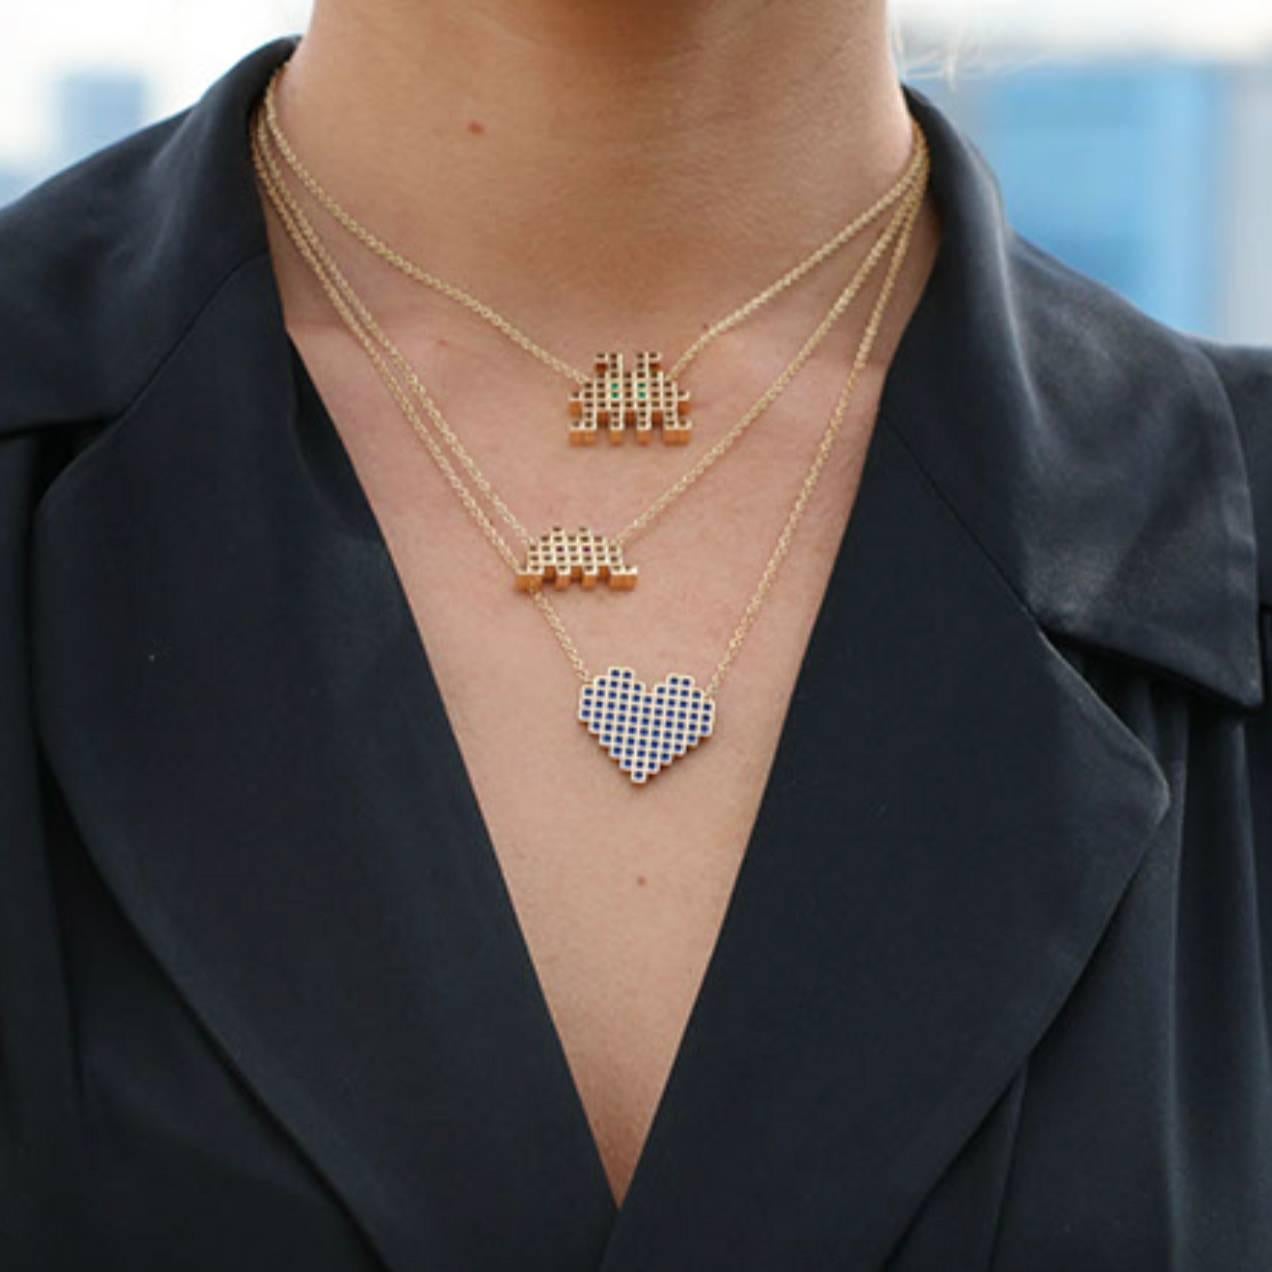 Francesca Grima Rose Gold Reversible Pixel Heart Necklace in Carbon Snow Enamel For Sale 1